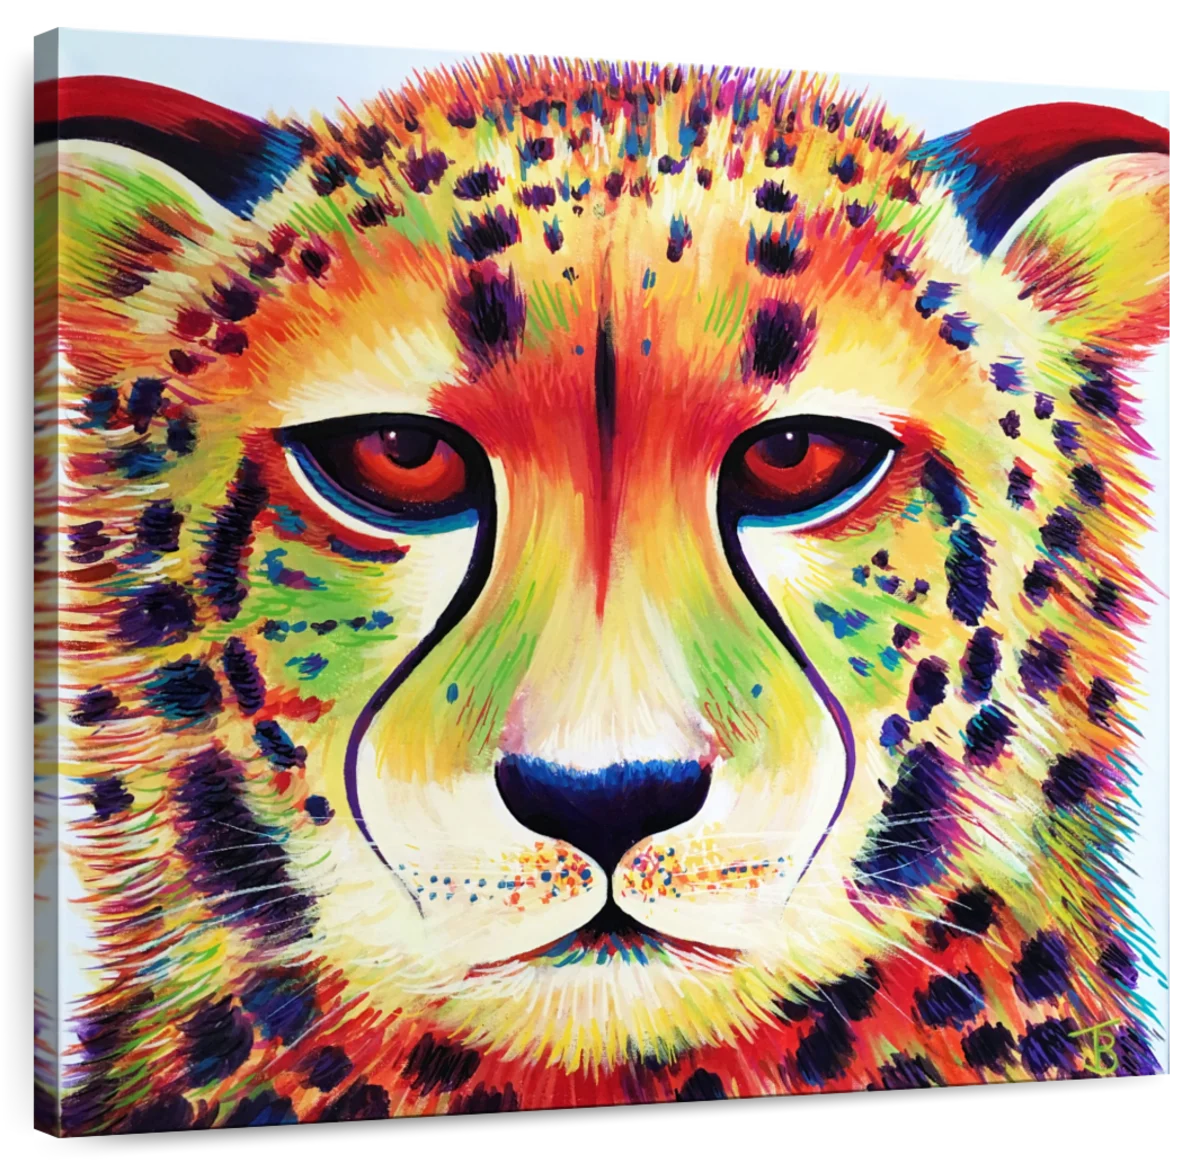 Rainbow Cheetah Wall Art: Canvas Prints, Art Prints & Framed Canvas